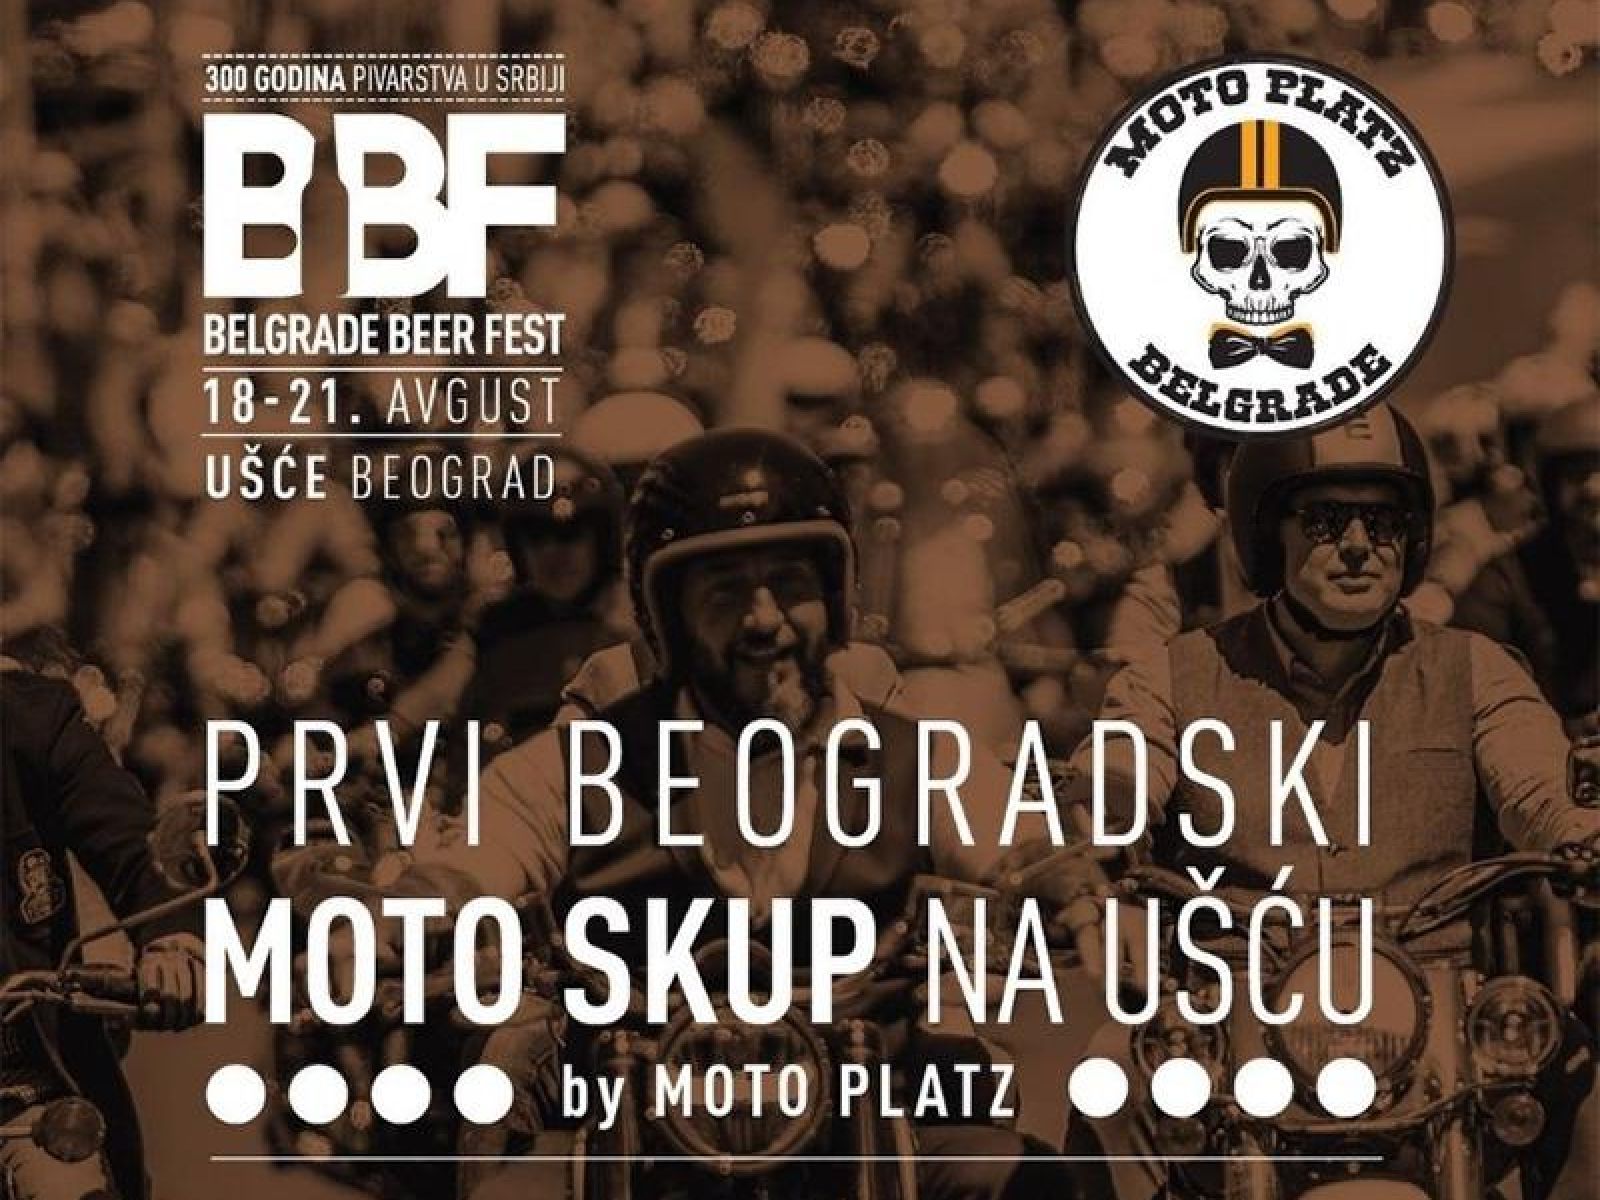 Prvi beogradski moto skup by Moto Platz Beograd